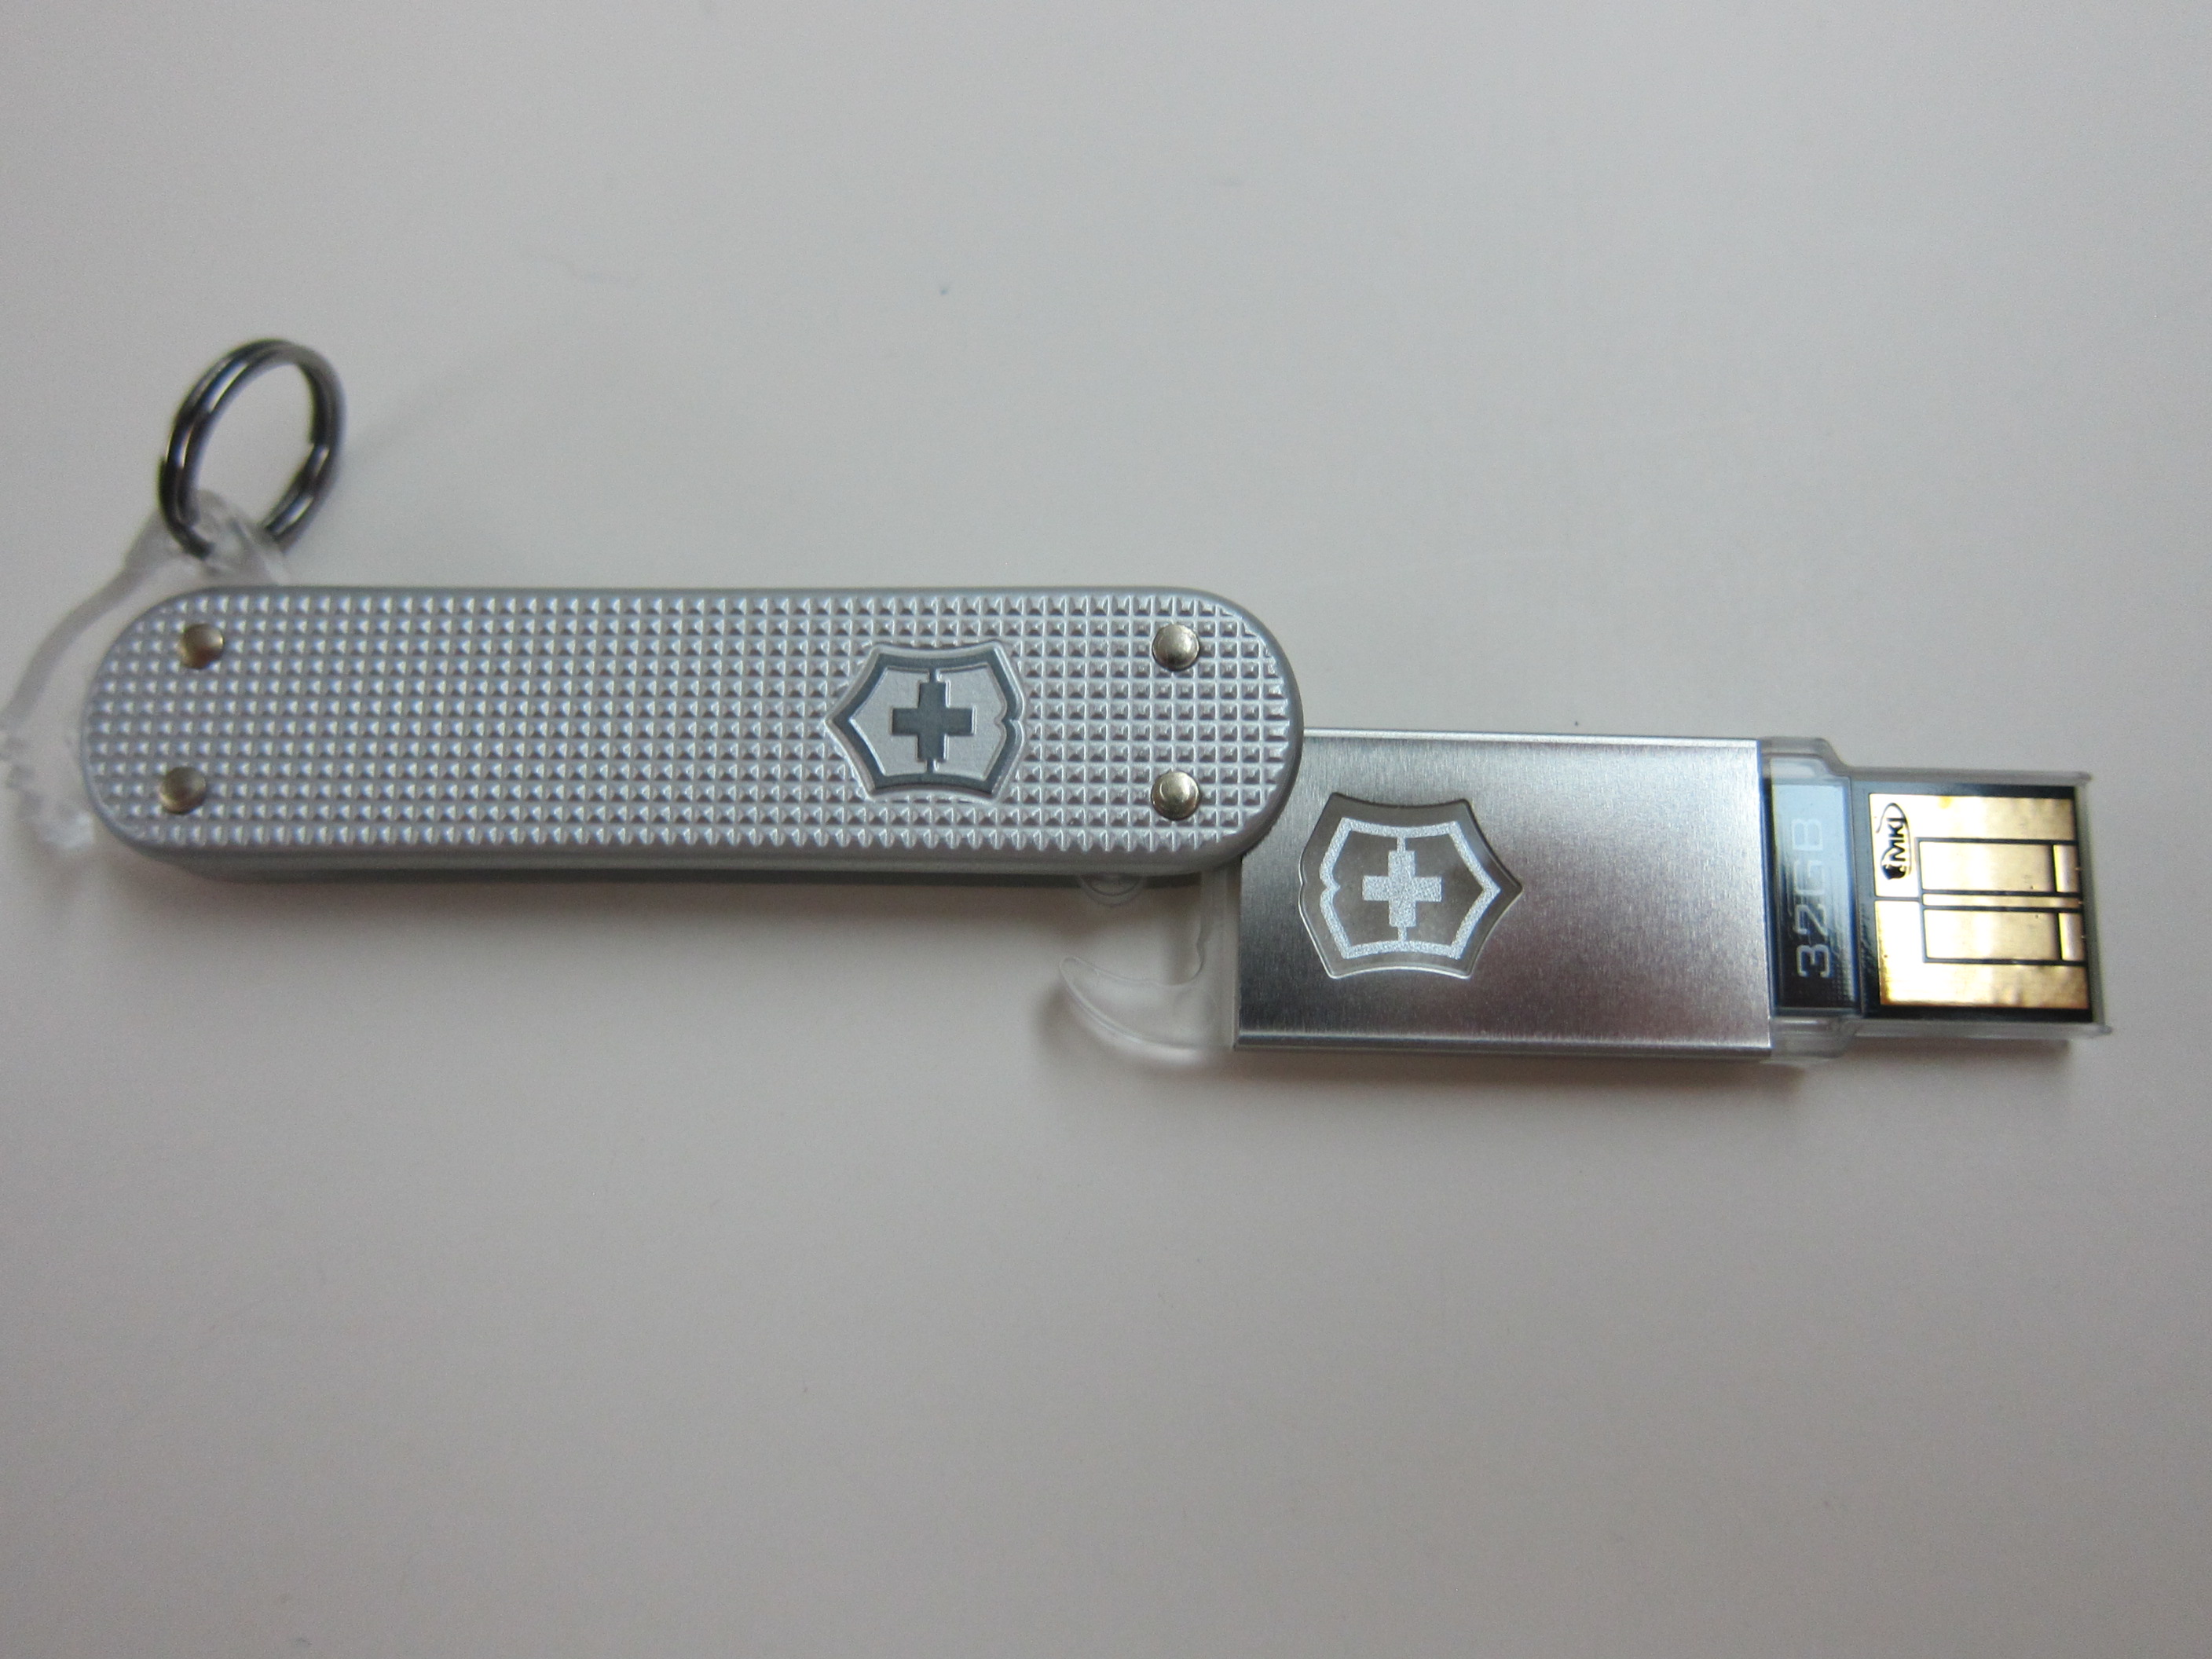 Victorinox Swiss Army Slim USB 2.0 Flash Drive (32GB) « Blog |  lesterchan.net